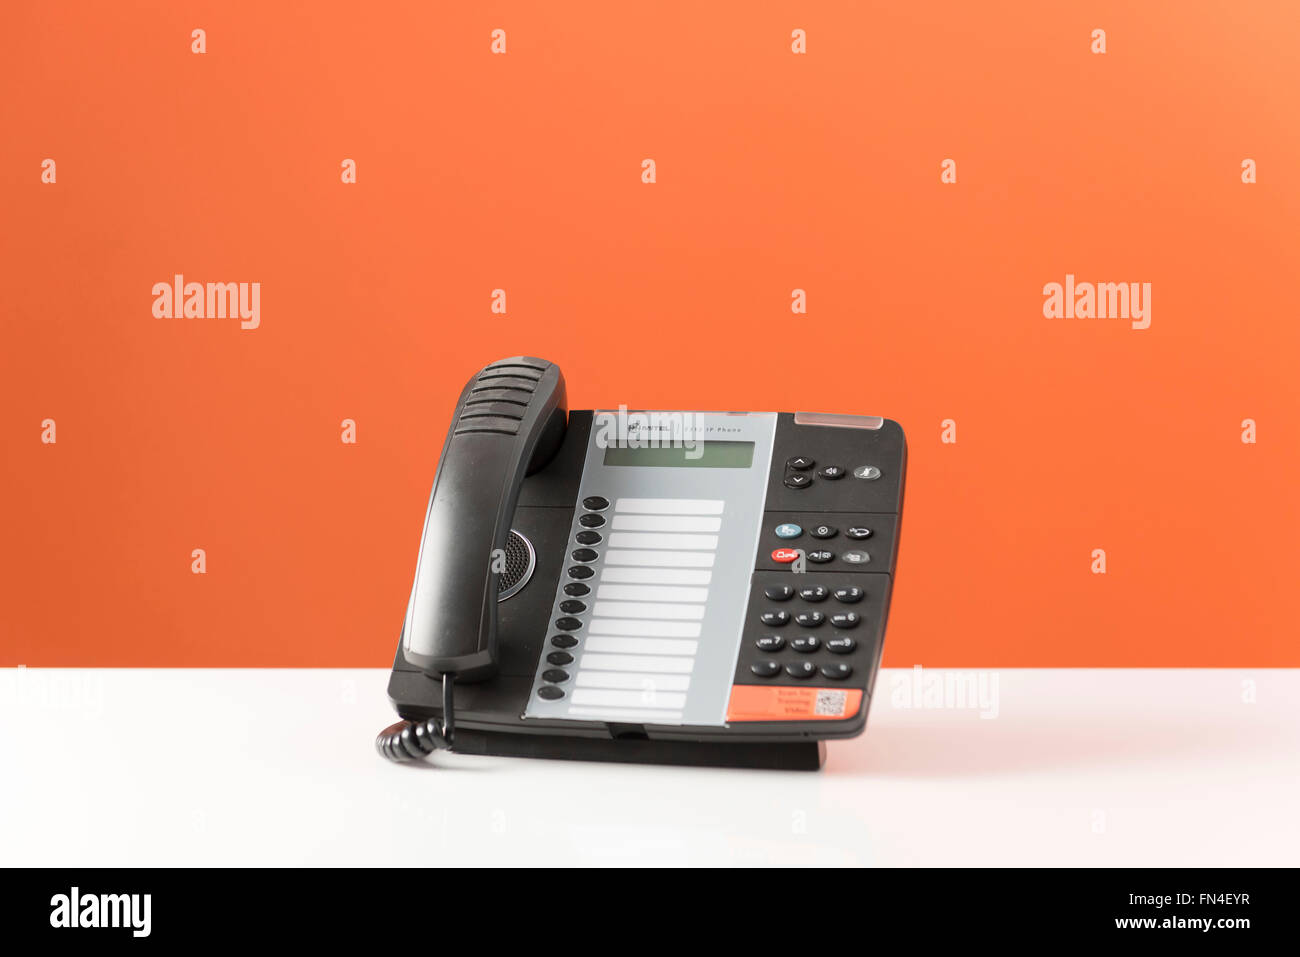 Office phone on an orange background. Stock Photo